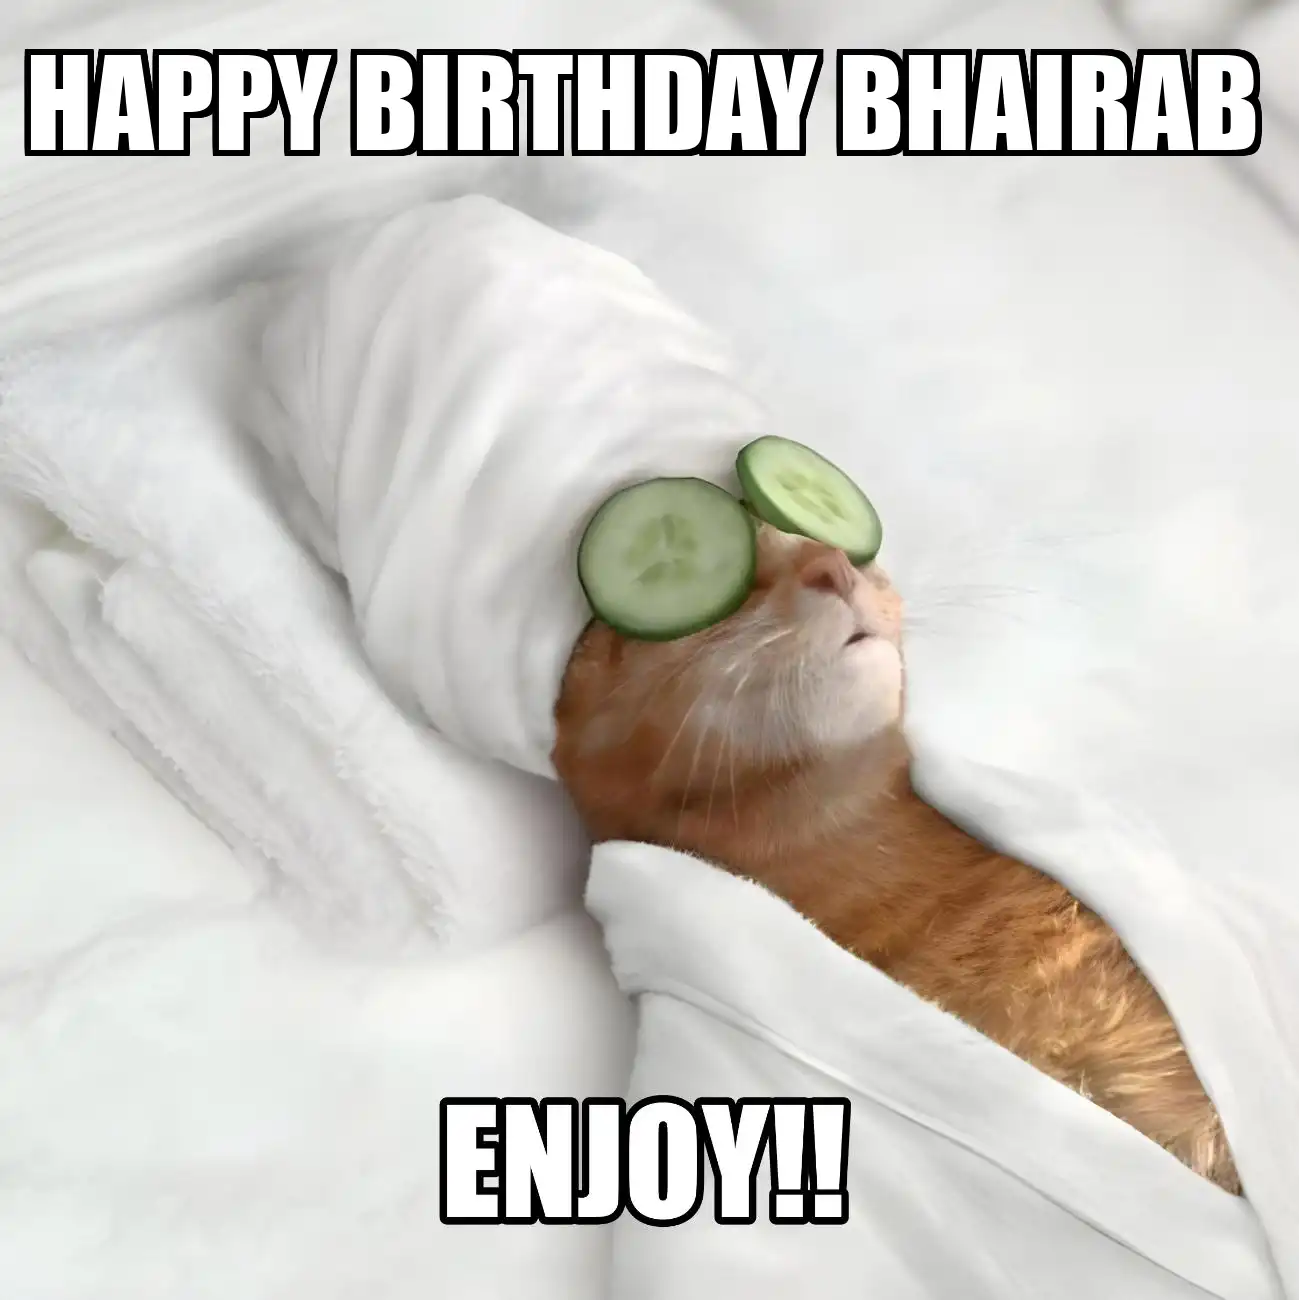 Happy Birthday Bhairab Enjoy Cat Meme